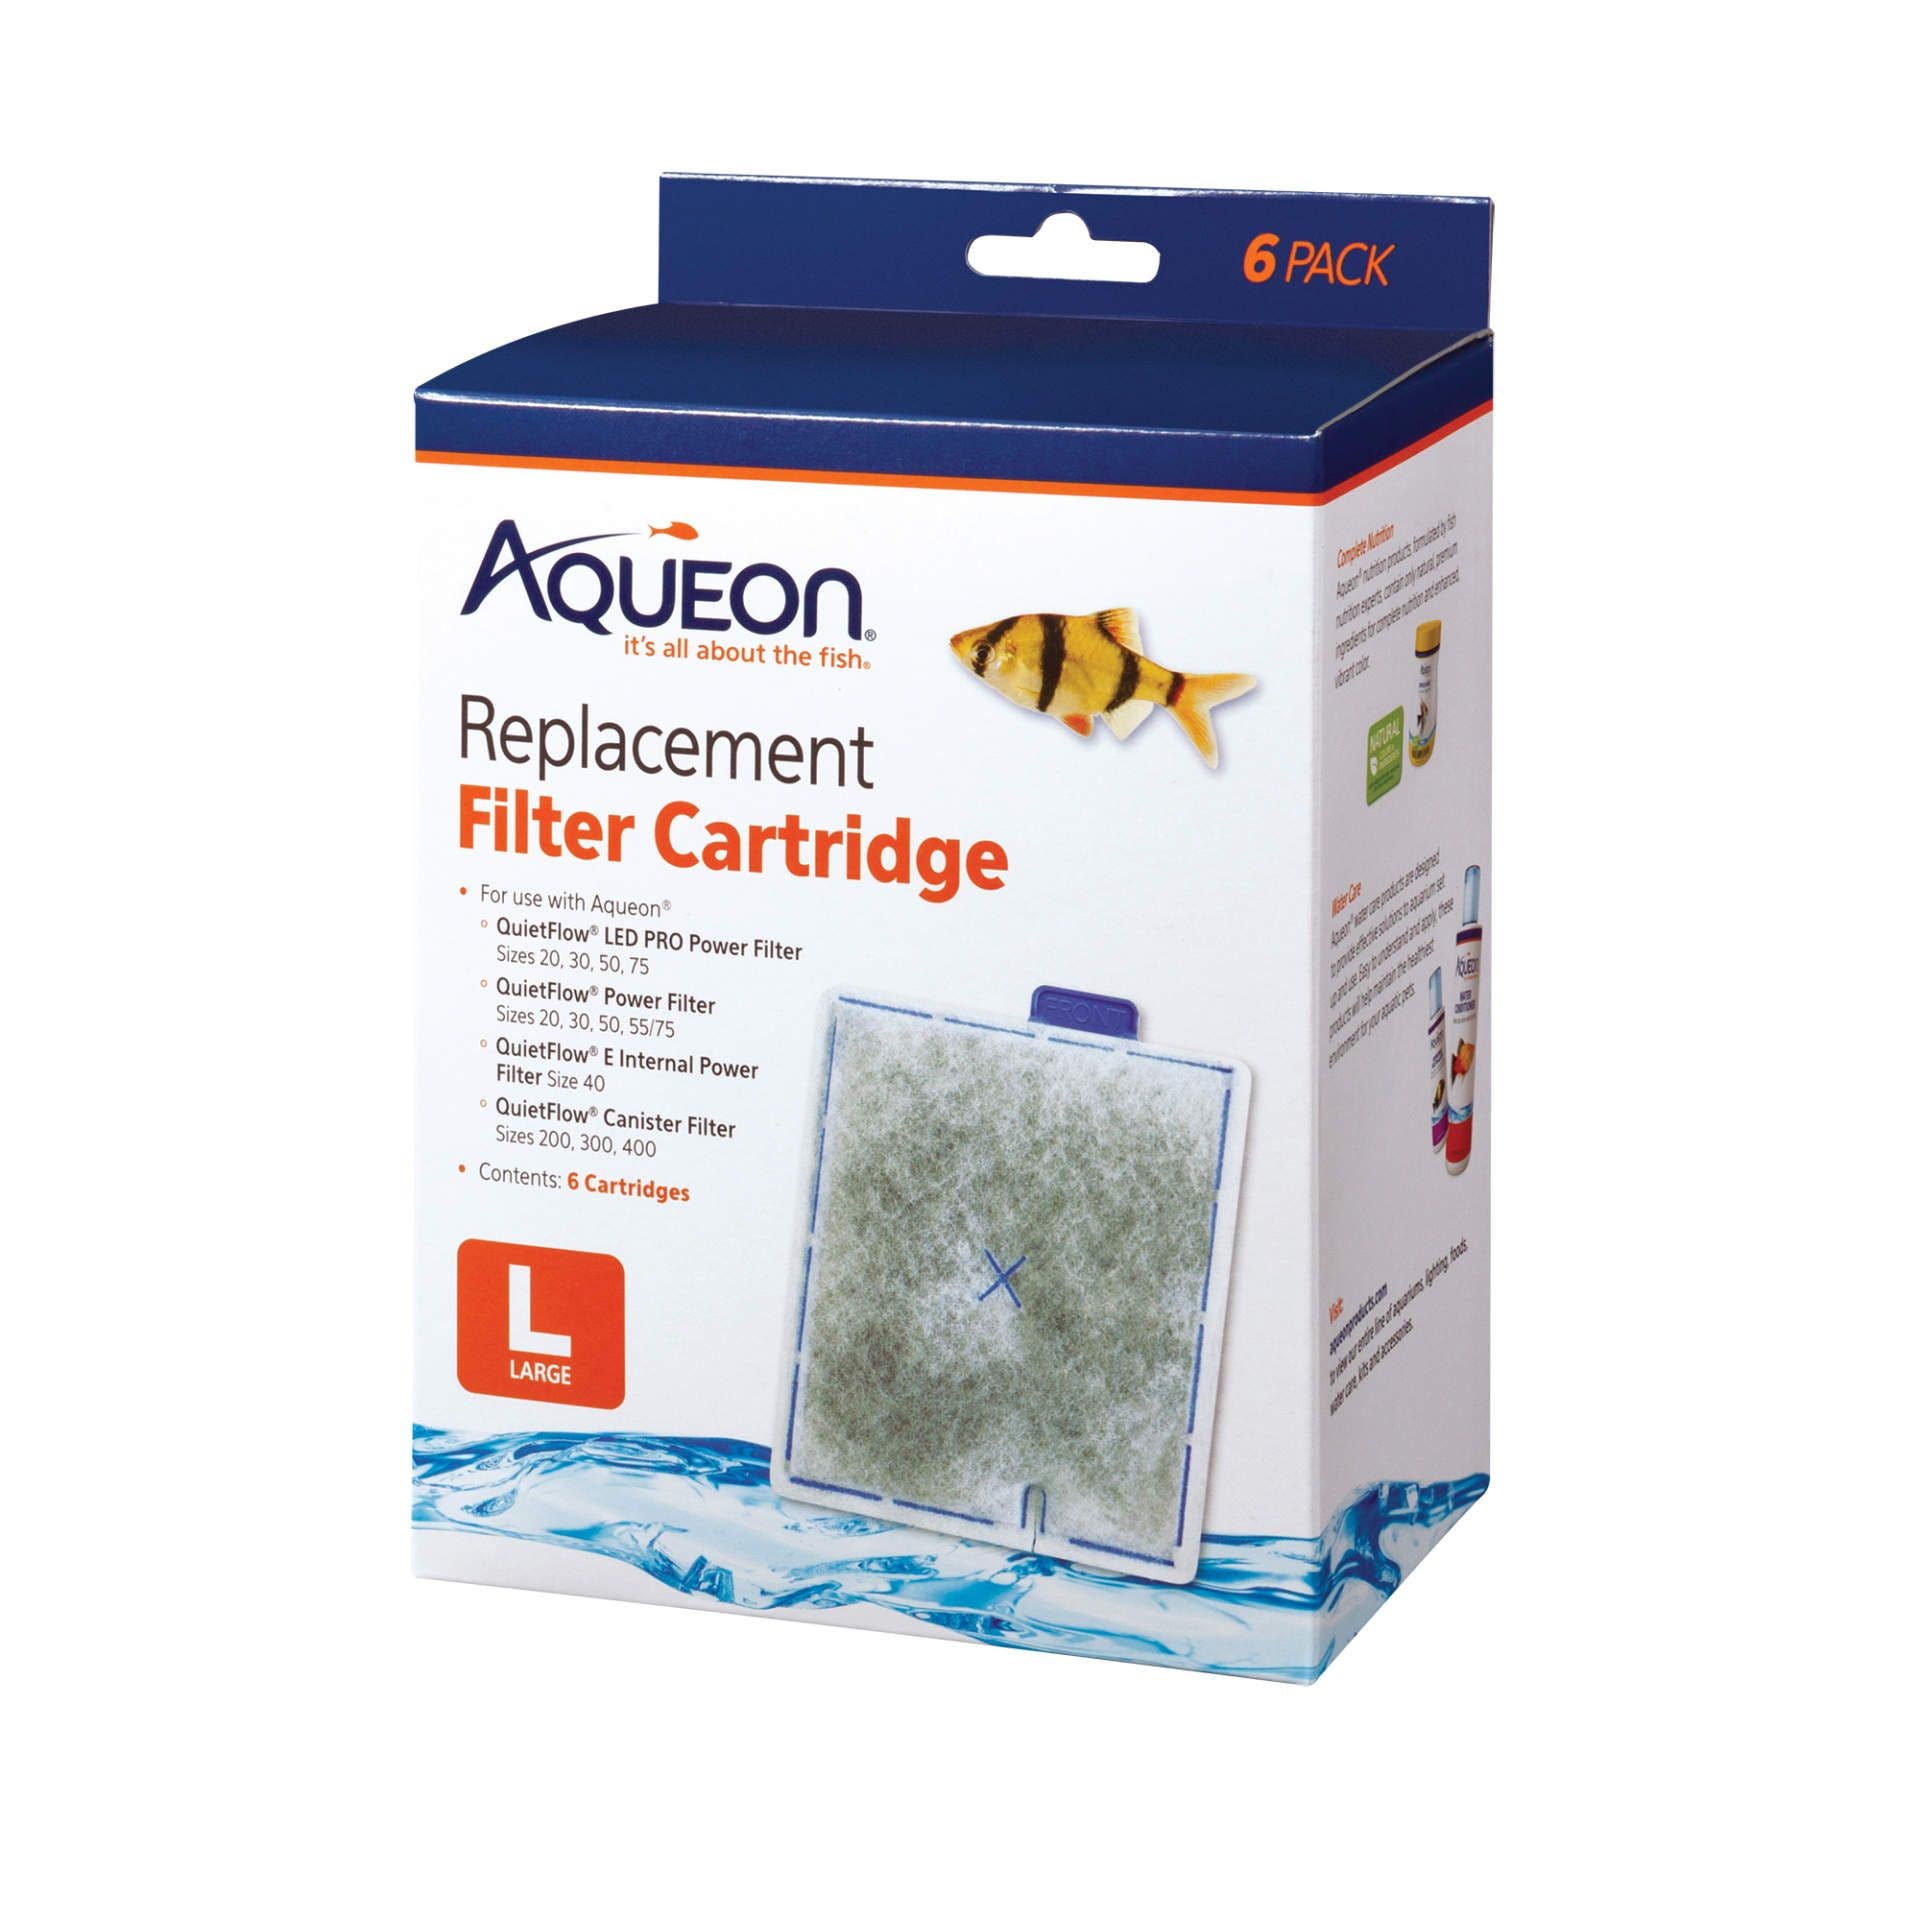 Aqueon large cartridge 6 pack fish